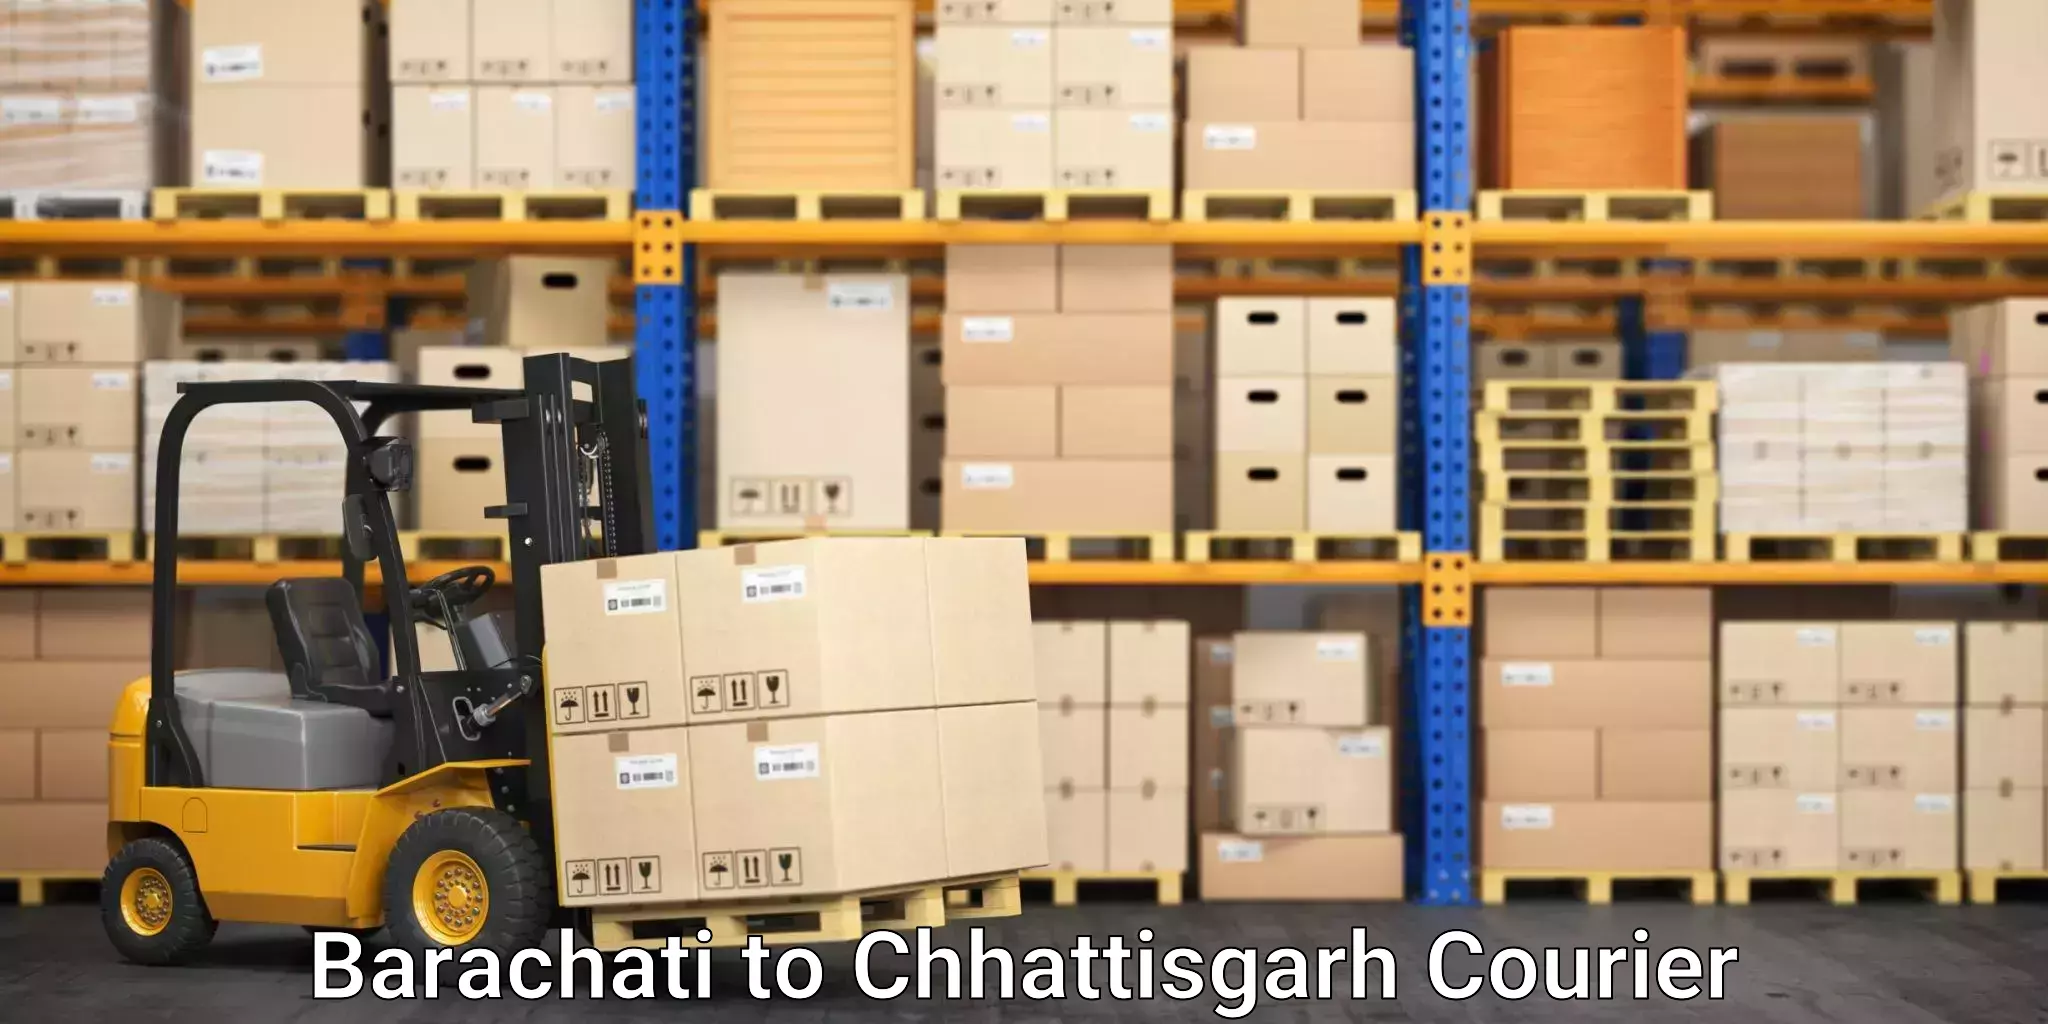 Furniture delivery service Barachati to Bhatapara